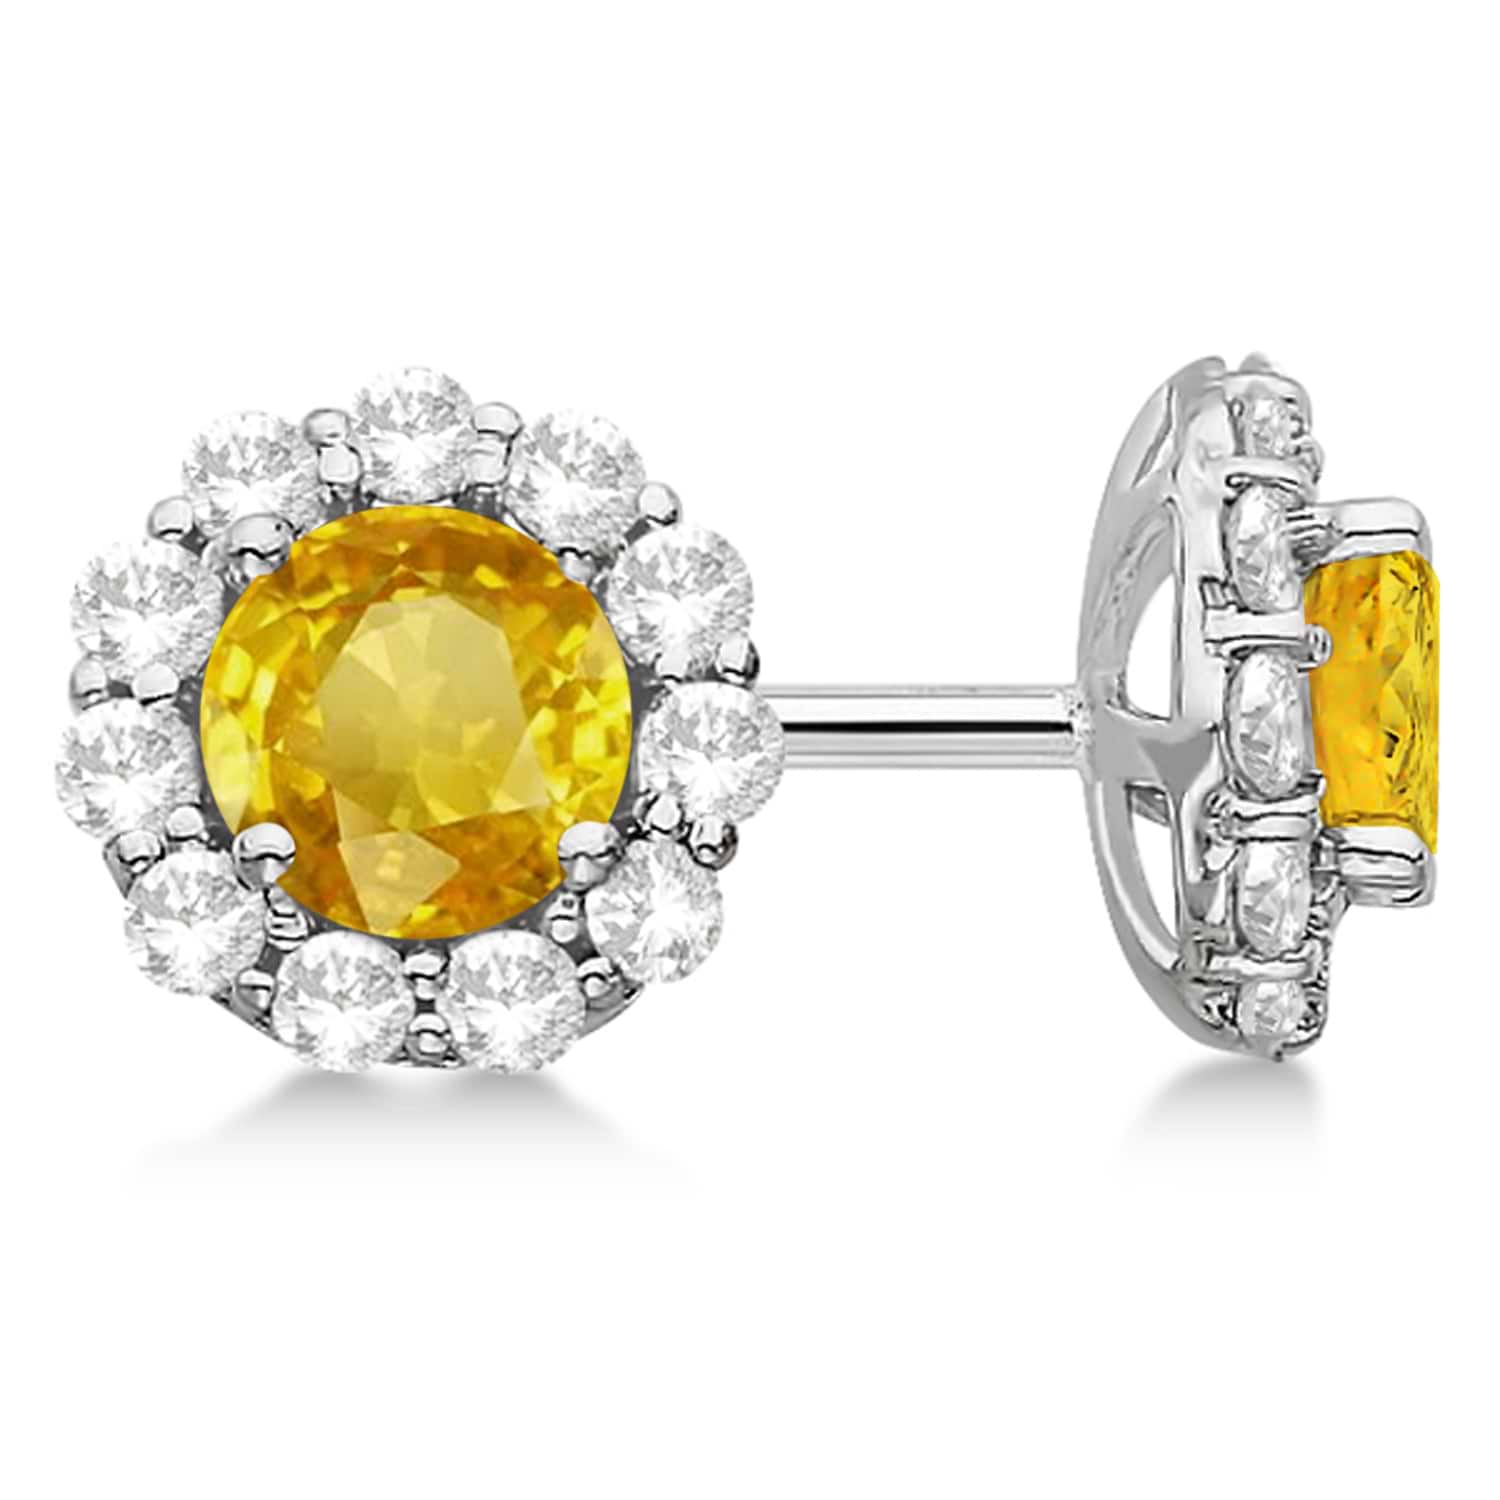 Halo Yellow Sapphire & Diamond Stud Earrings 14kt White Gold 2.62ct.